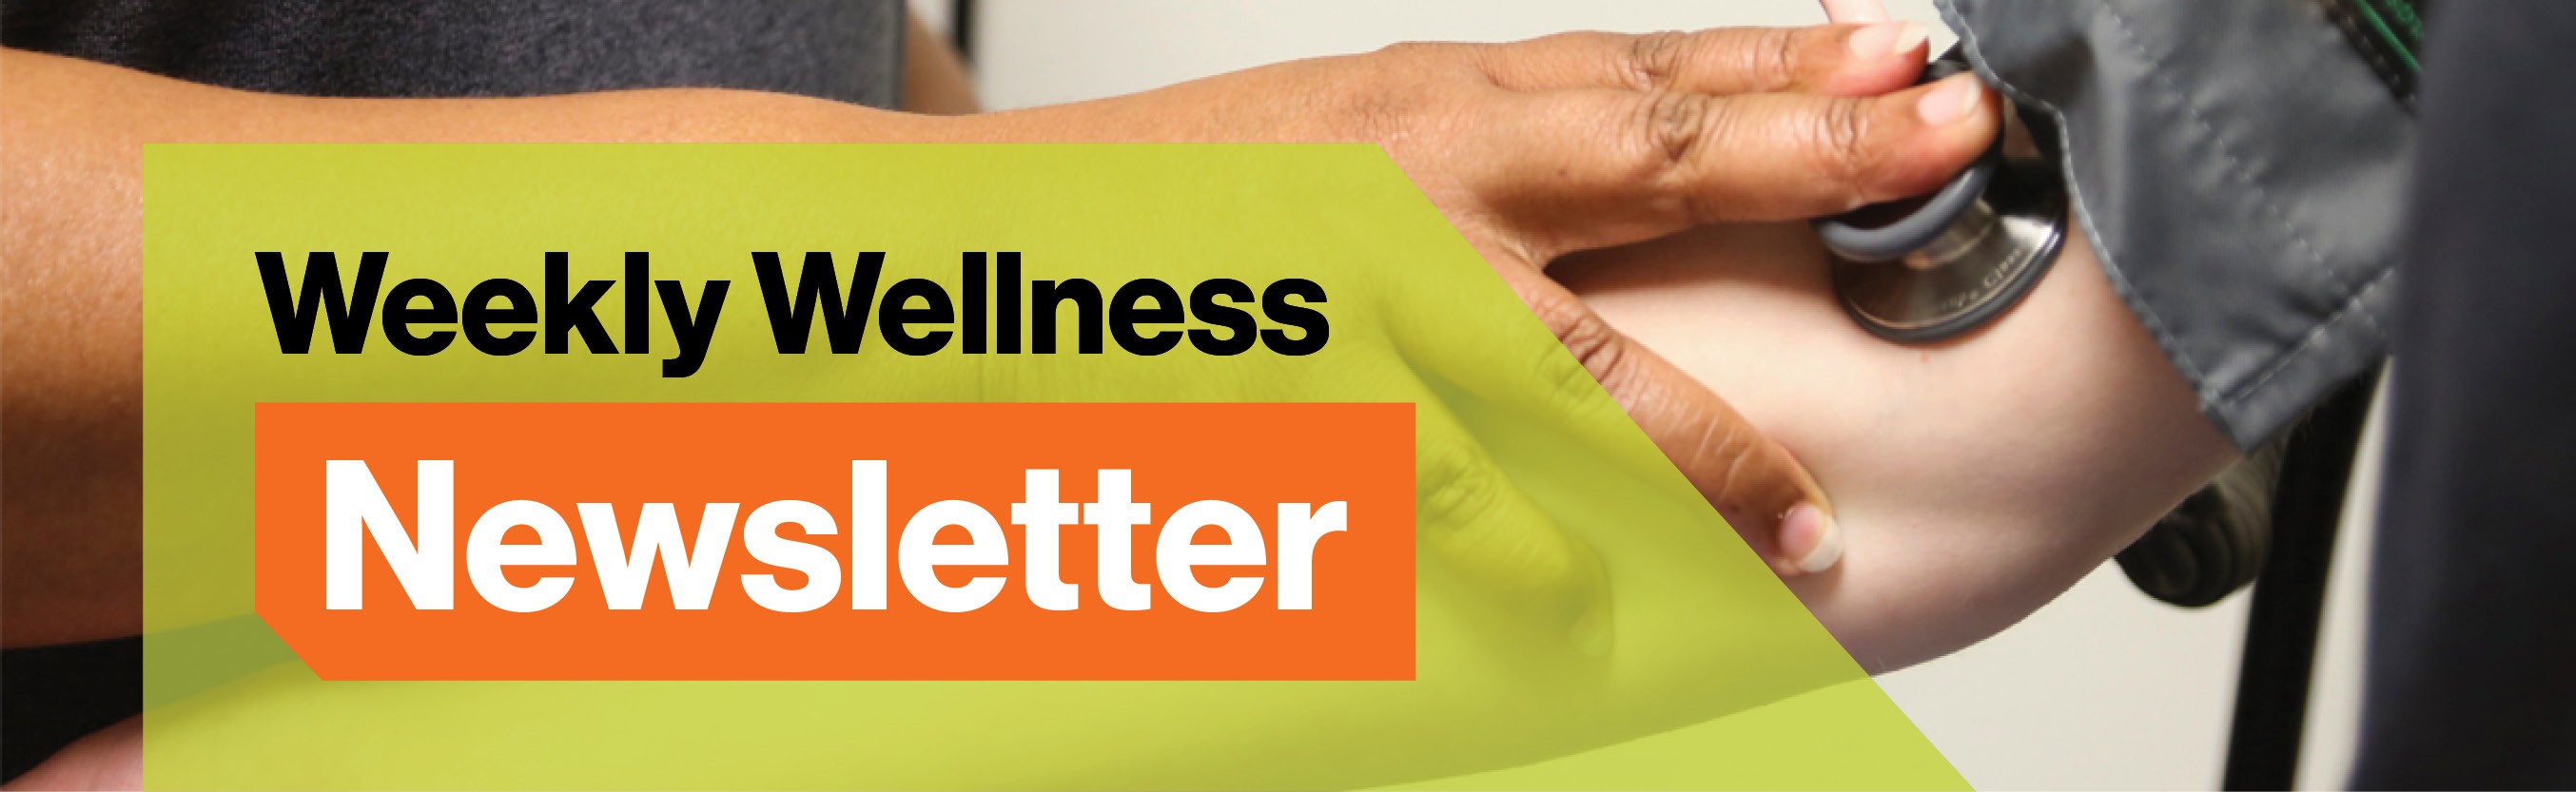 Weekly Wellness Newsletter header